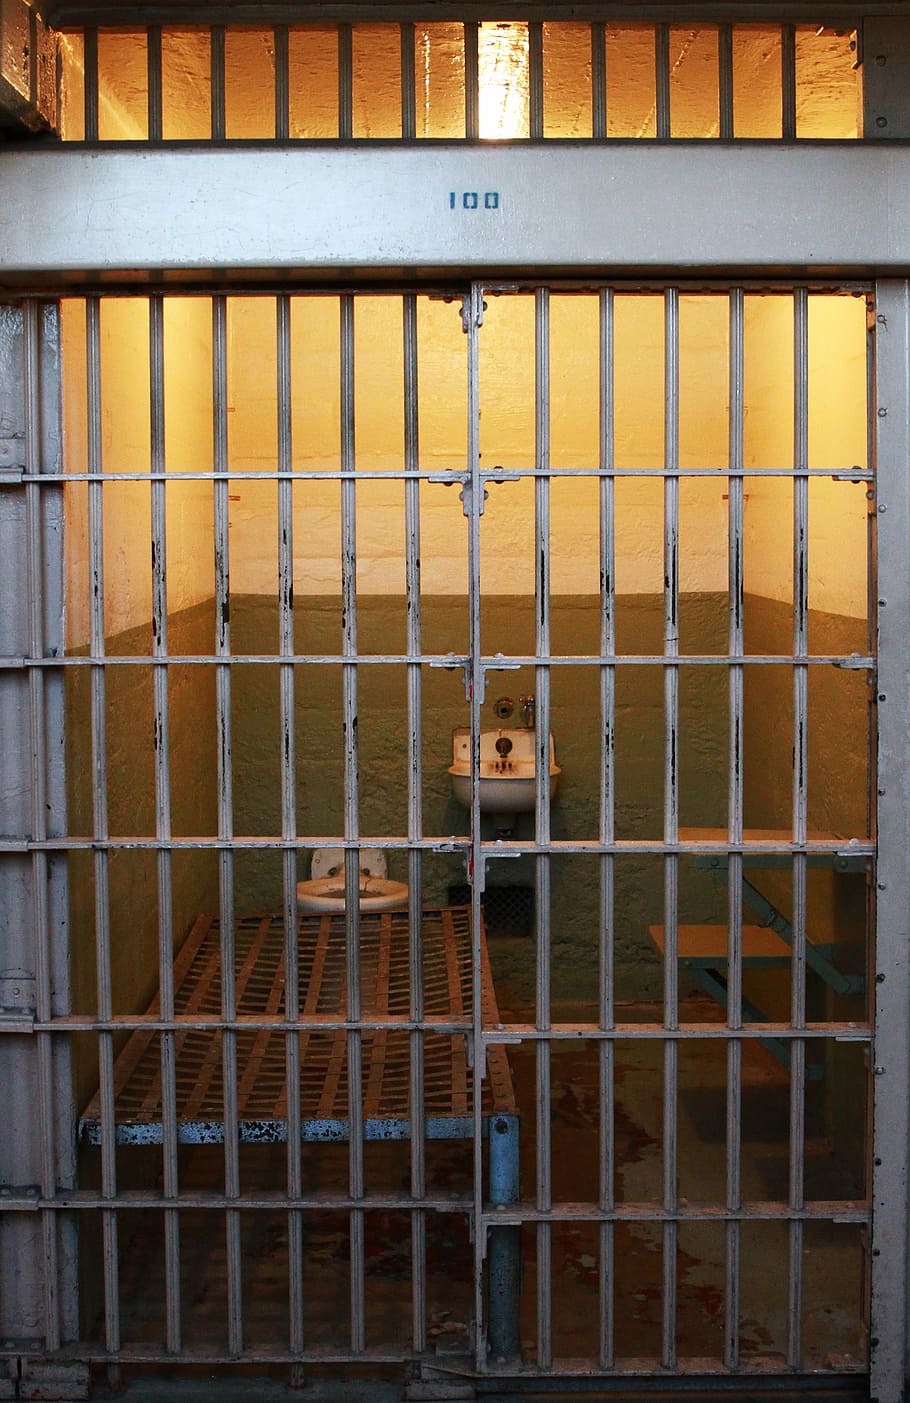 Closed Gray Metal Gate Jail Jail Cell Alcatraz Prison Bars Behind Bars Criminal Prison 